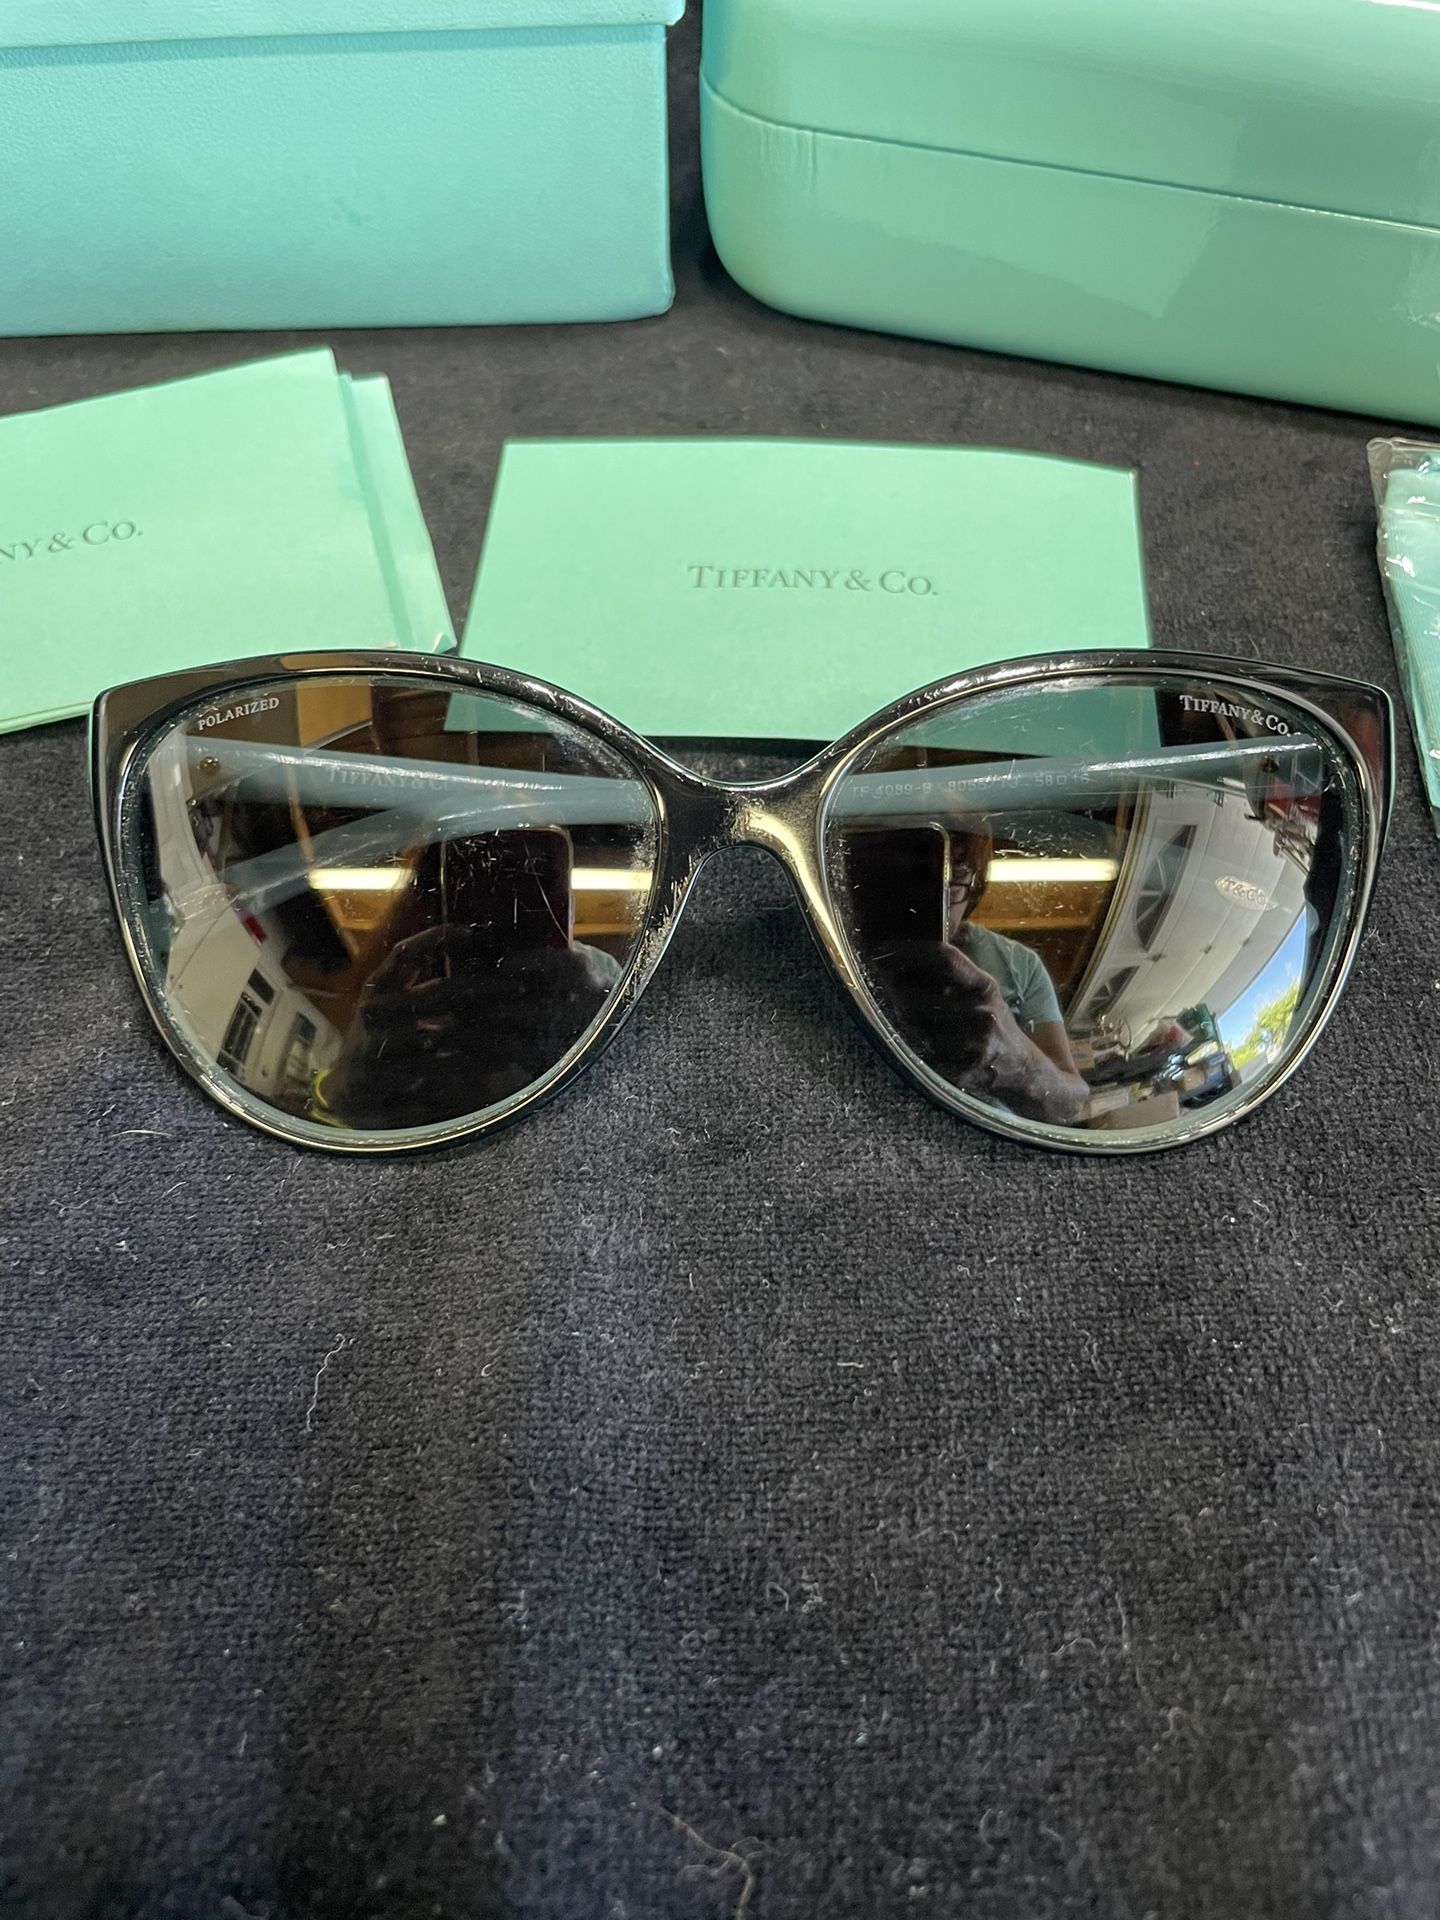 Tiffany & Co Women’s sunglasses